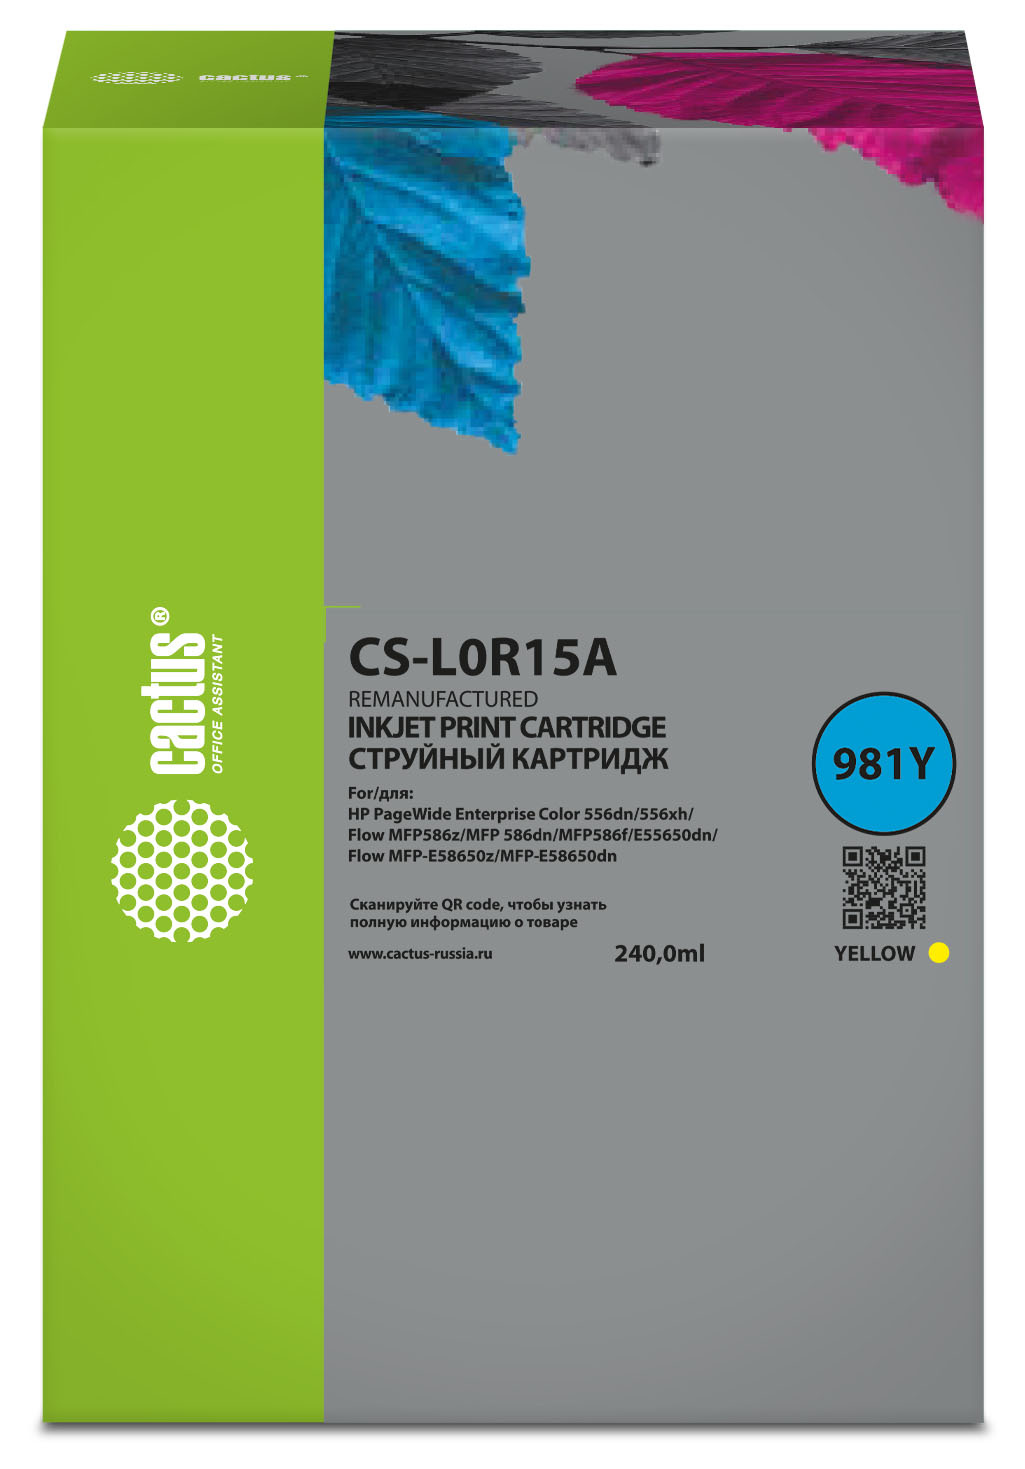 Картридж струйный Cactus CS-L0R15A 981Y желтый (240мл) для HP PageWide Enterprise Color 556dn/556xh/Flow MFP586z